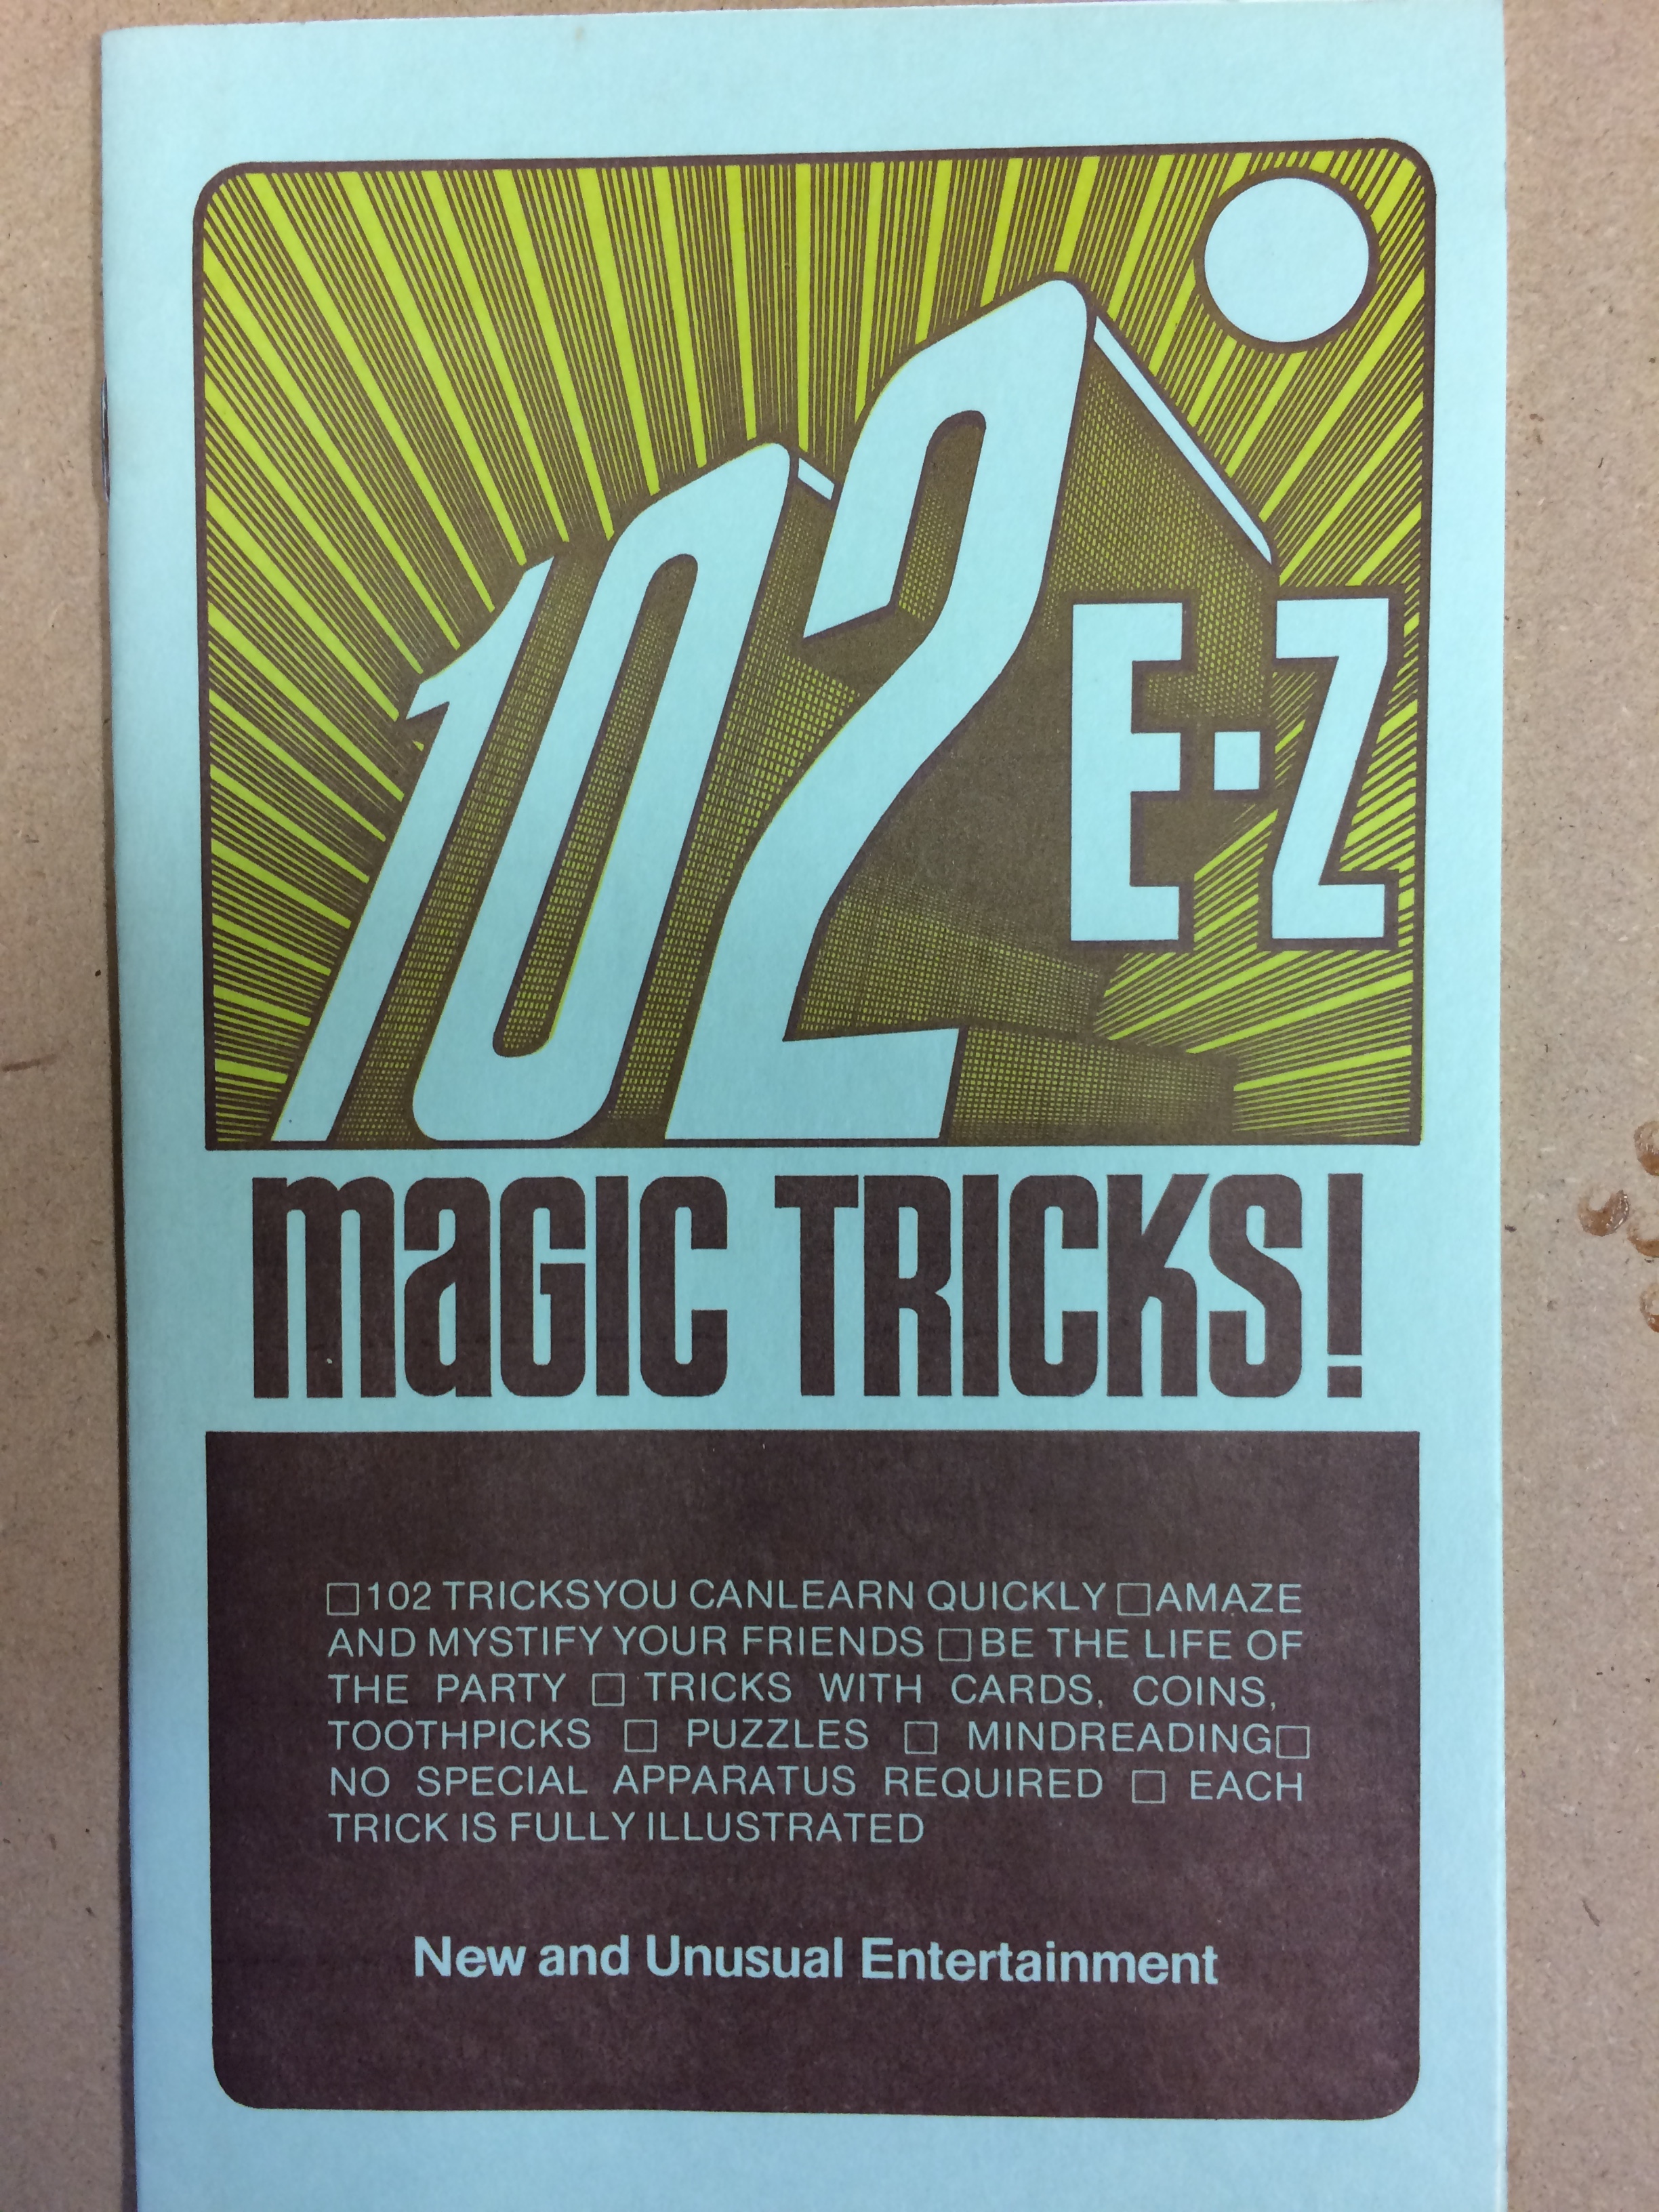 Learn an Easy Magic Trick! 